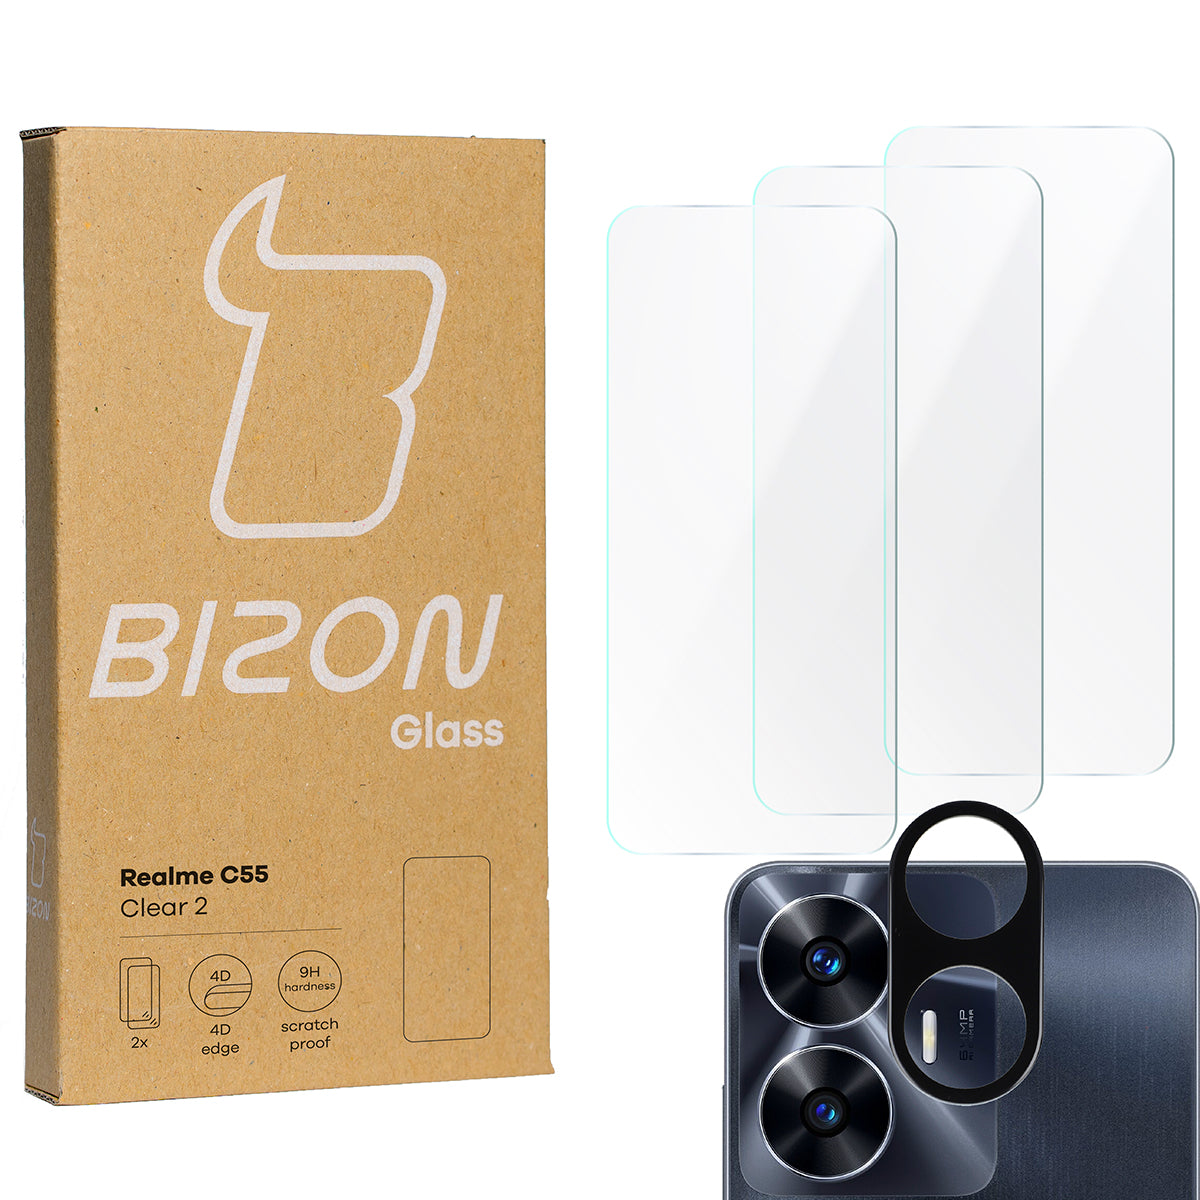 Gehärtetes Glas Bizon Glass Clear 2 - 3 Stück + Kameraschutz, Realme C55